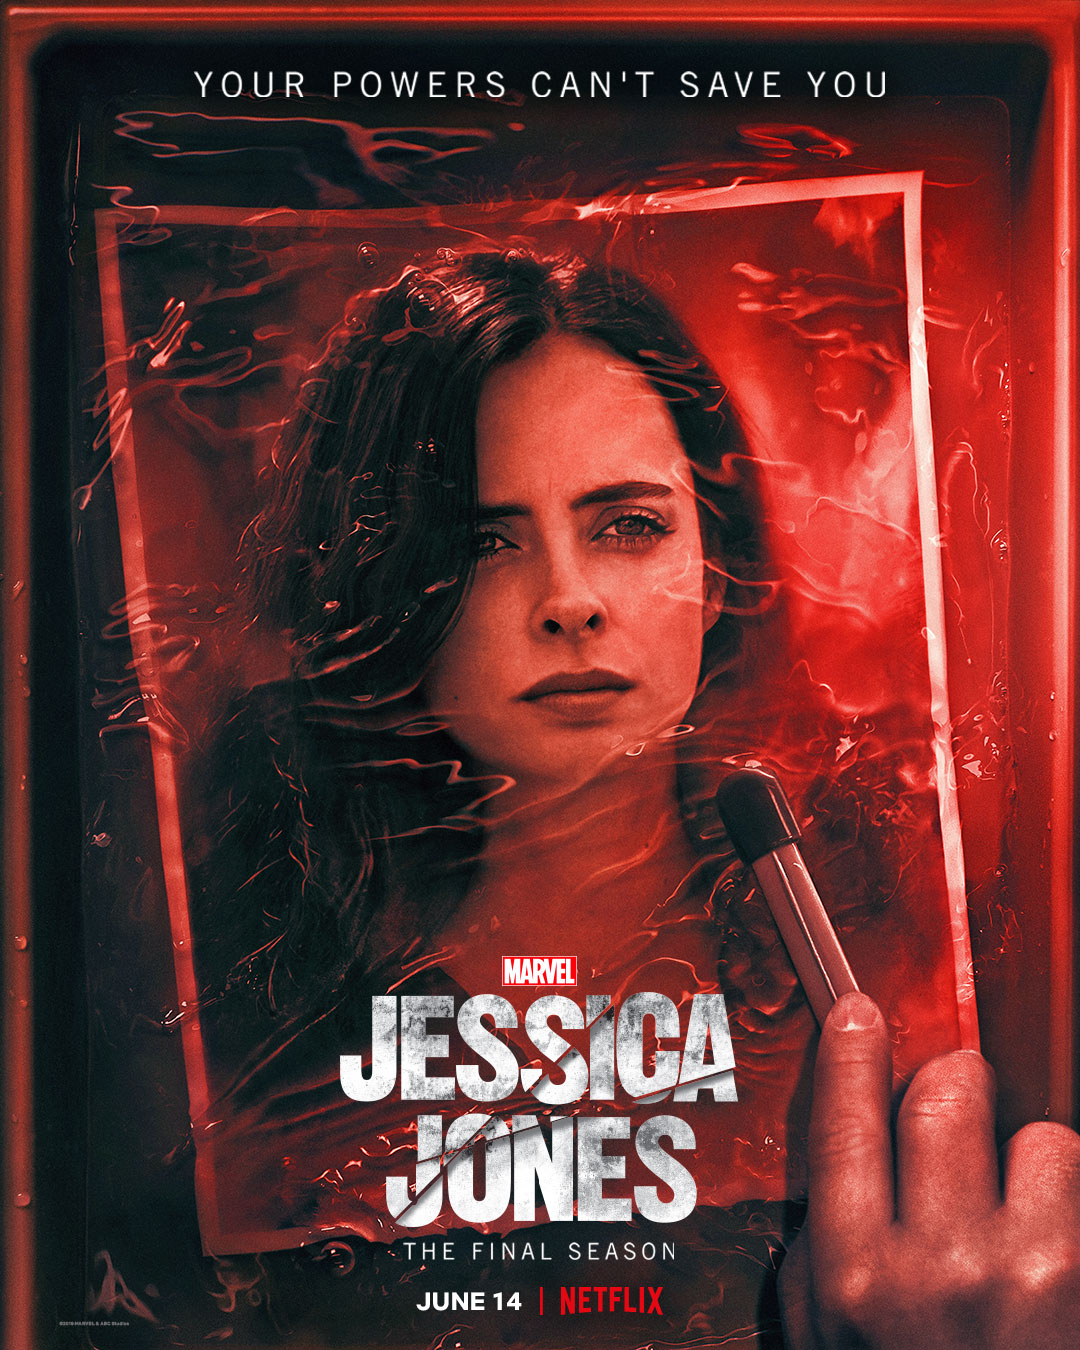 A Sneak Preview of Jessica Jones’ Final Season on Netflix